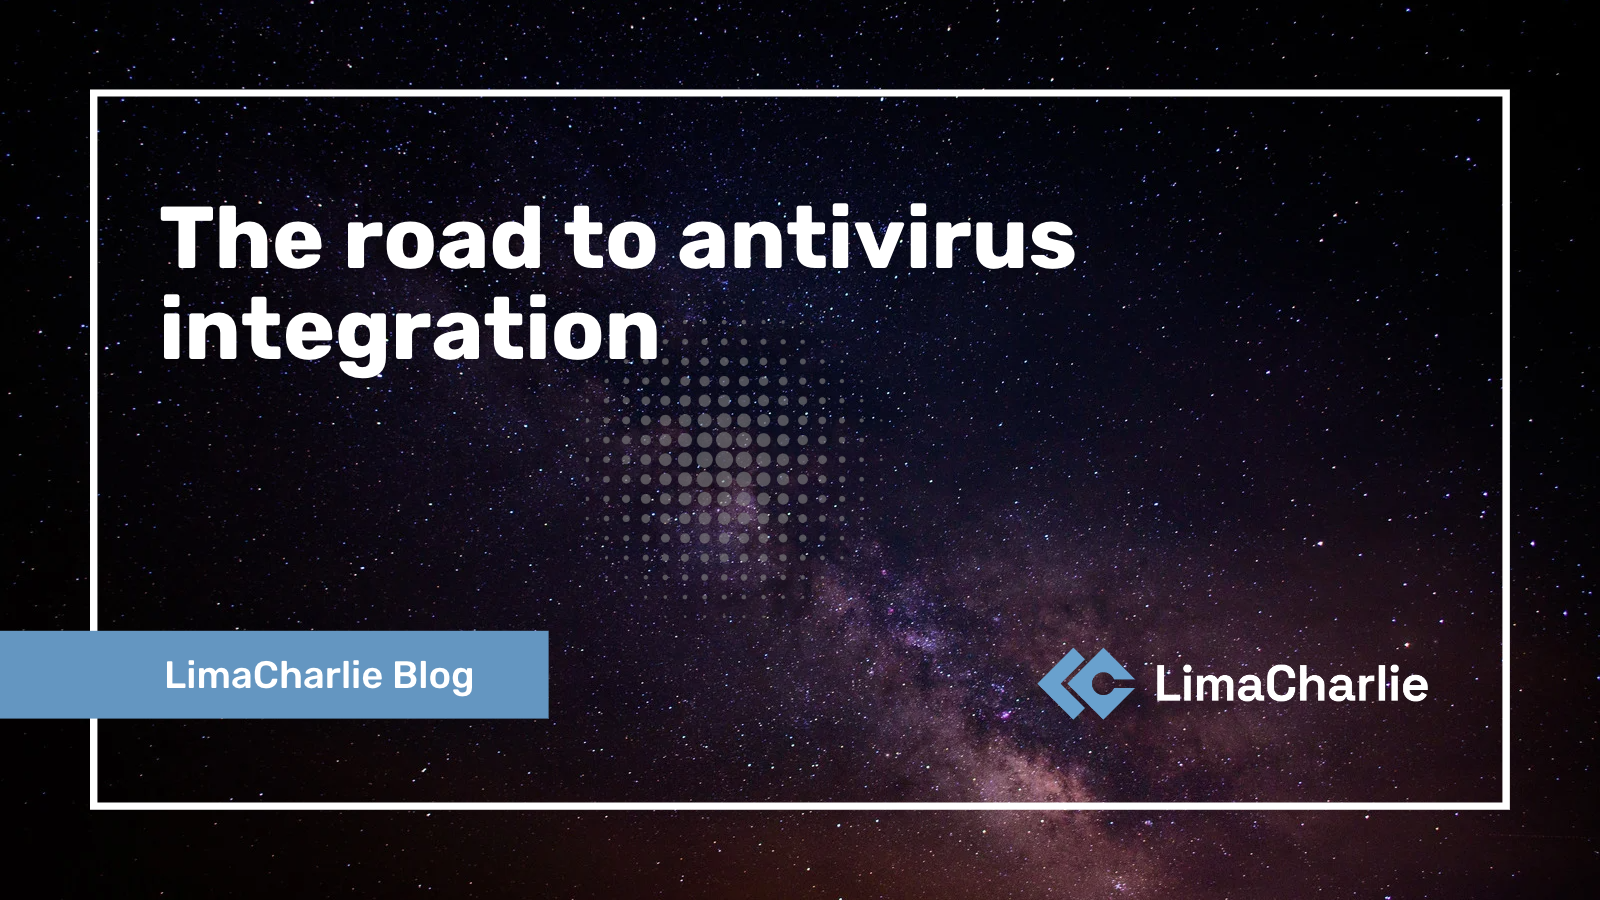 The road to antivirus integration